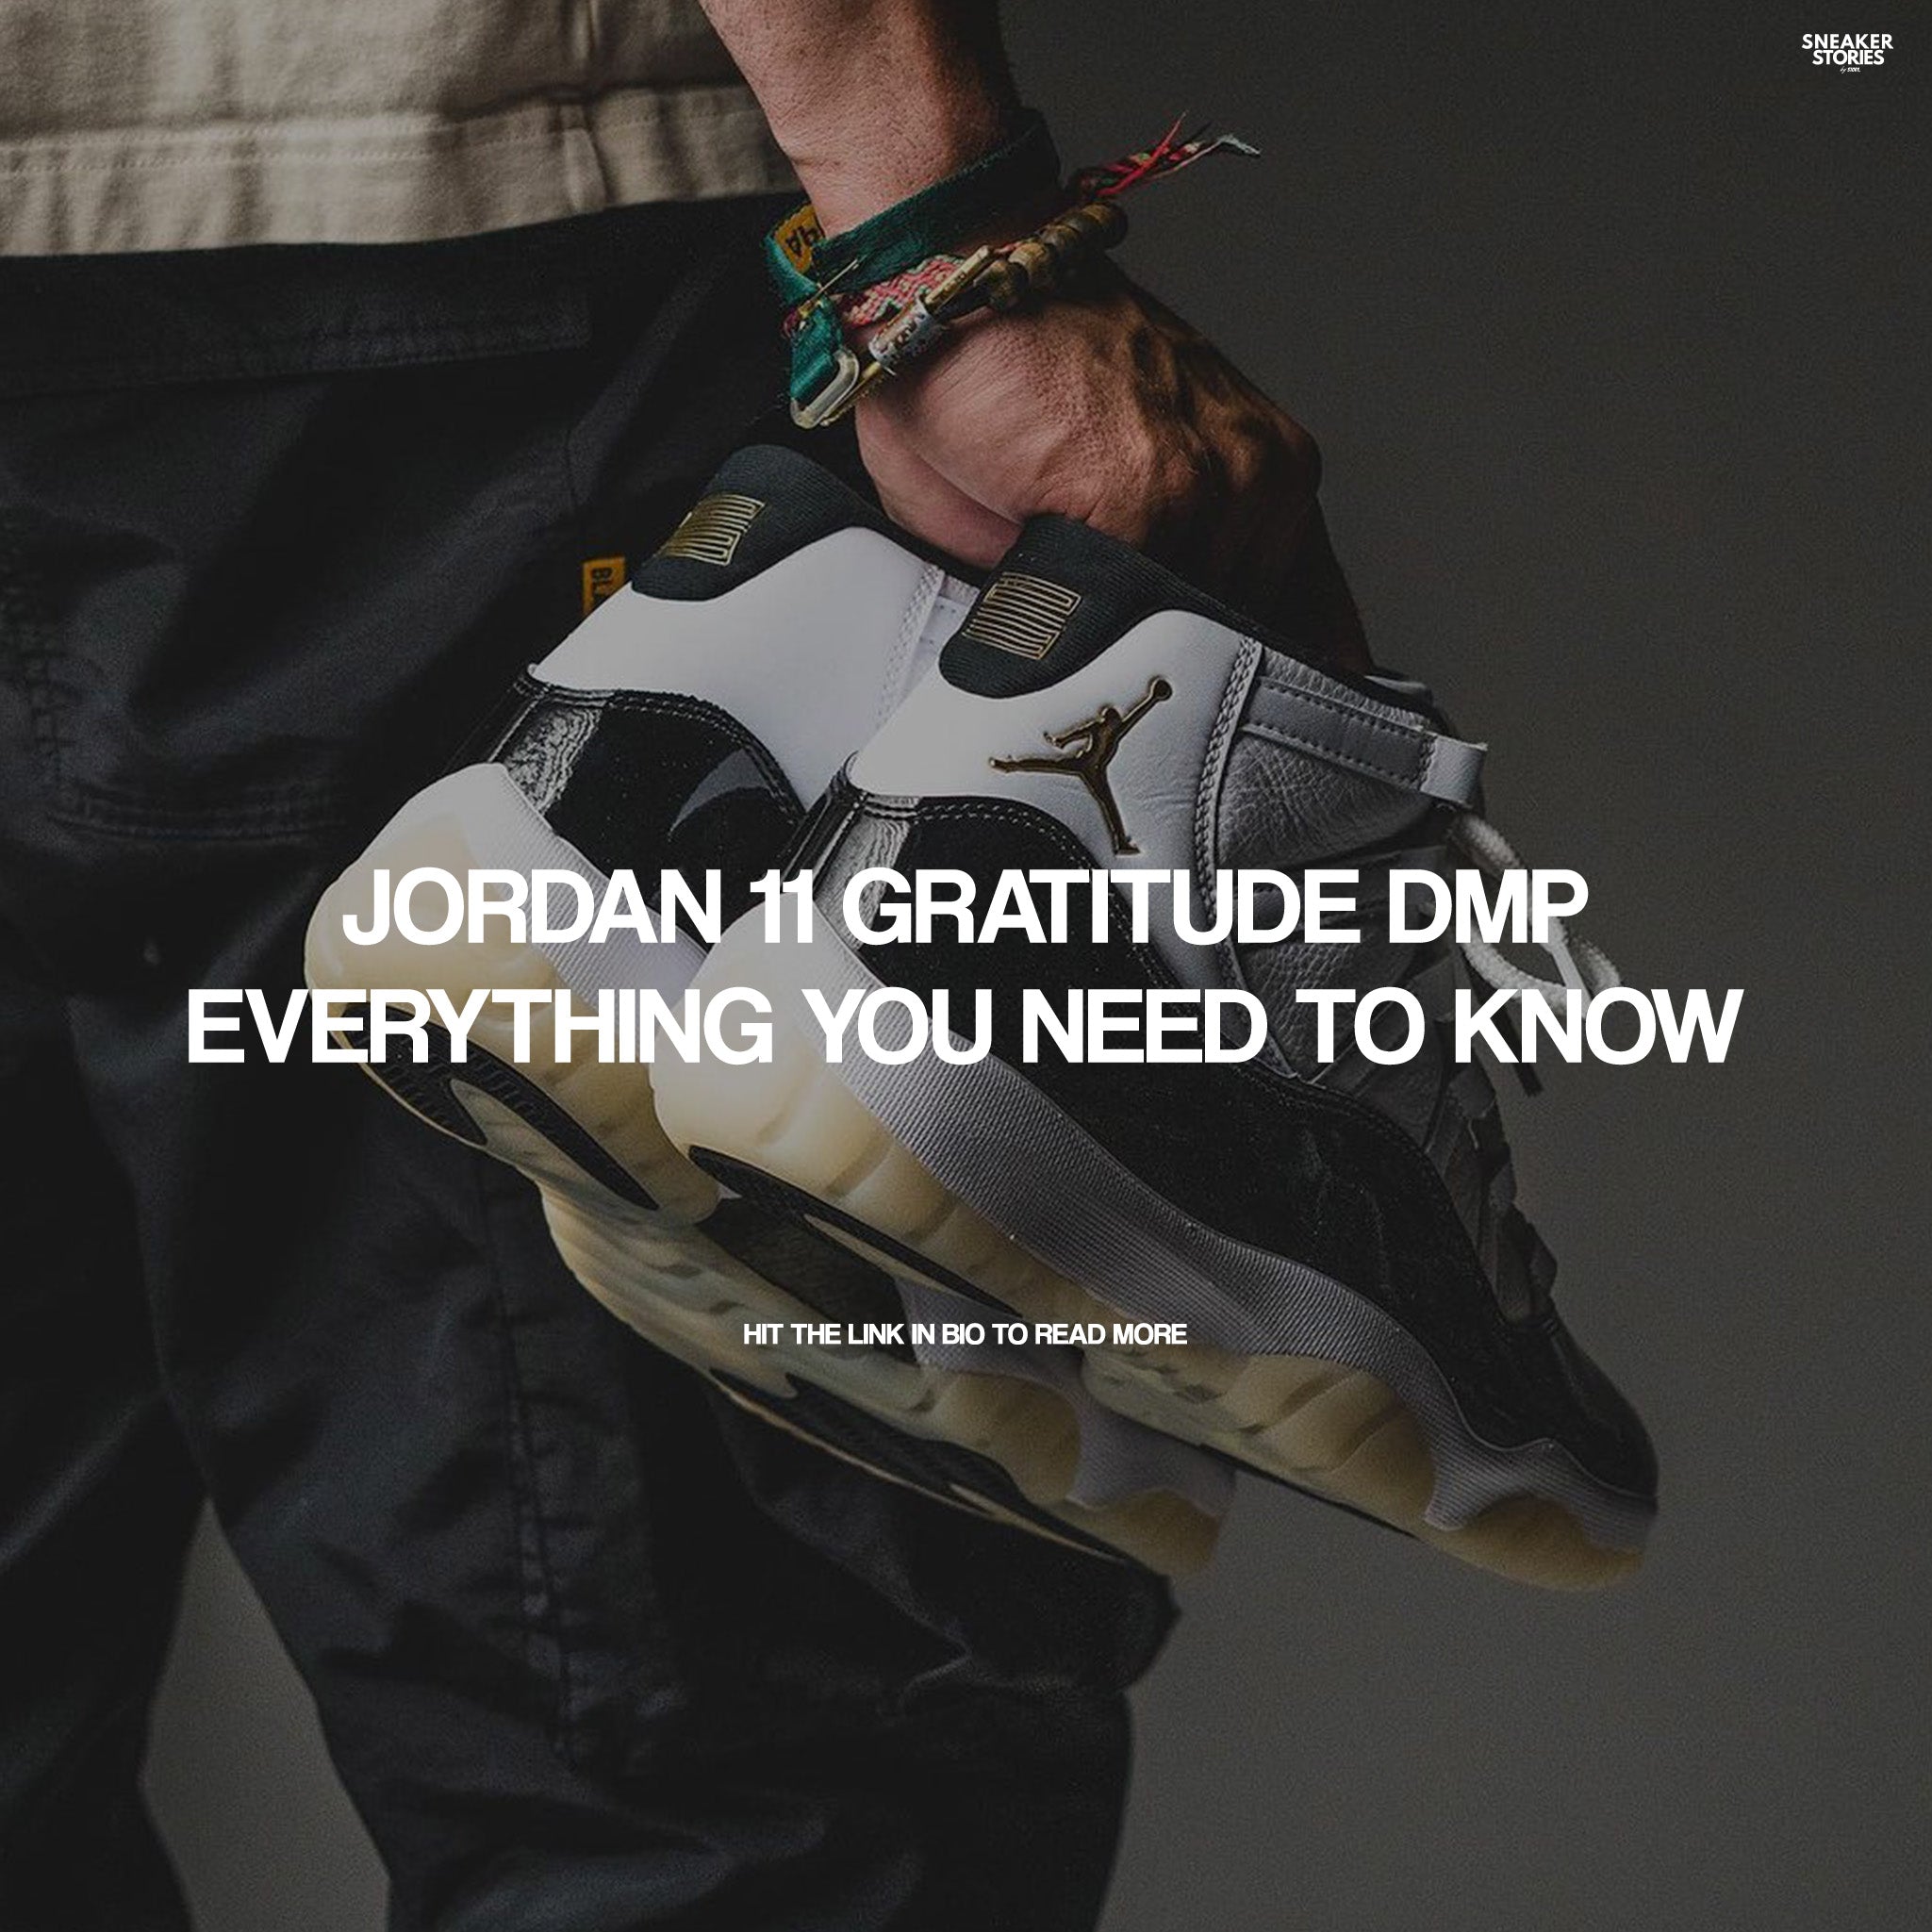 Jordan 11 Gratitude DMP Everything you need to know